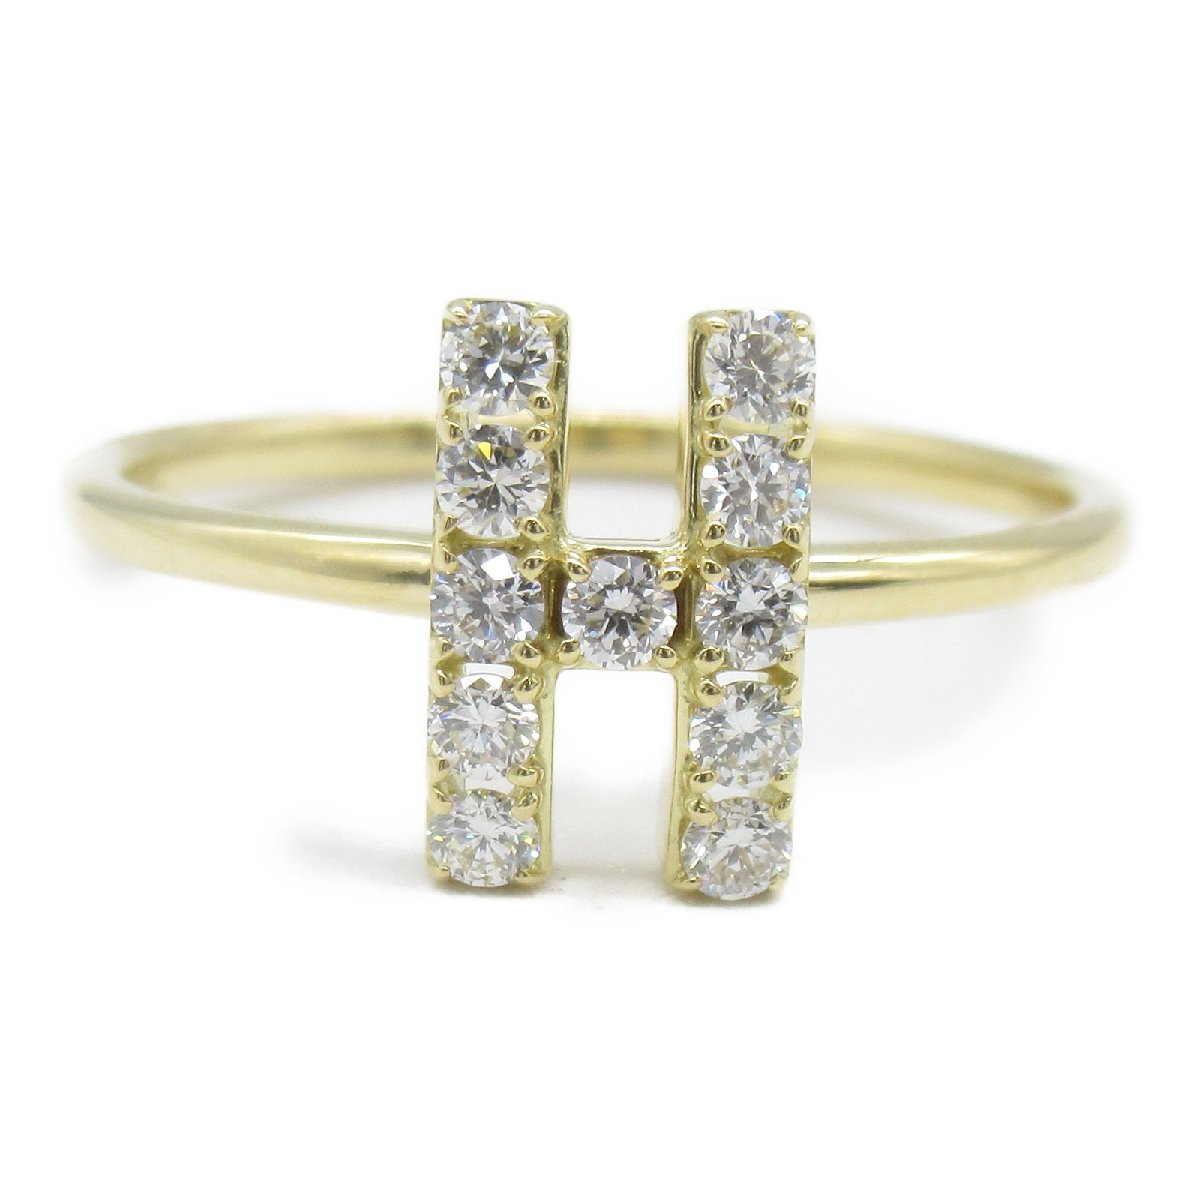 AHKAH Ahkah ring * ring pull mi etoile initial ring clear series K18( yellow gold ) diamond used lady's 